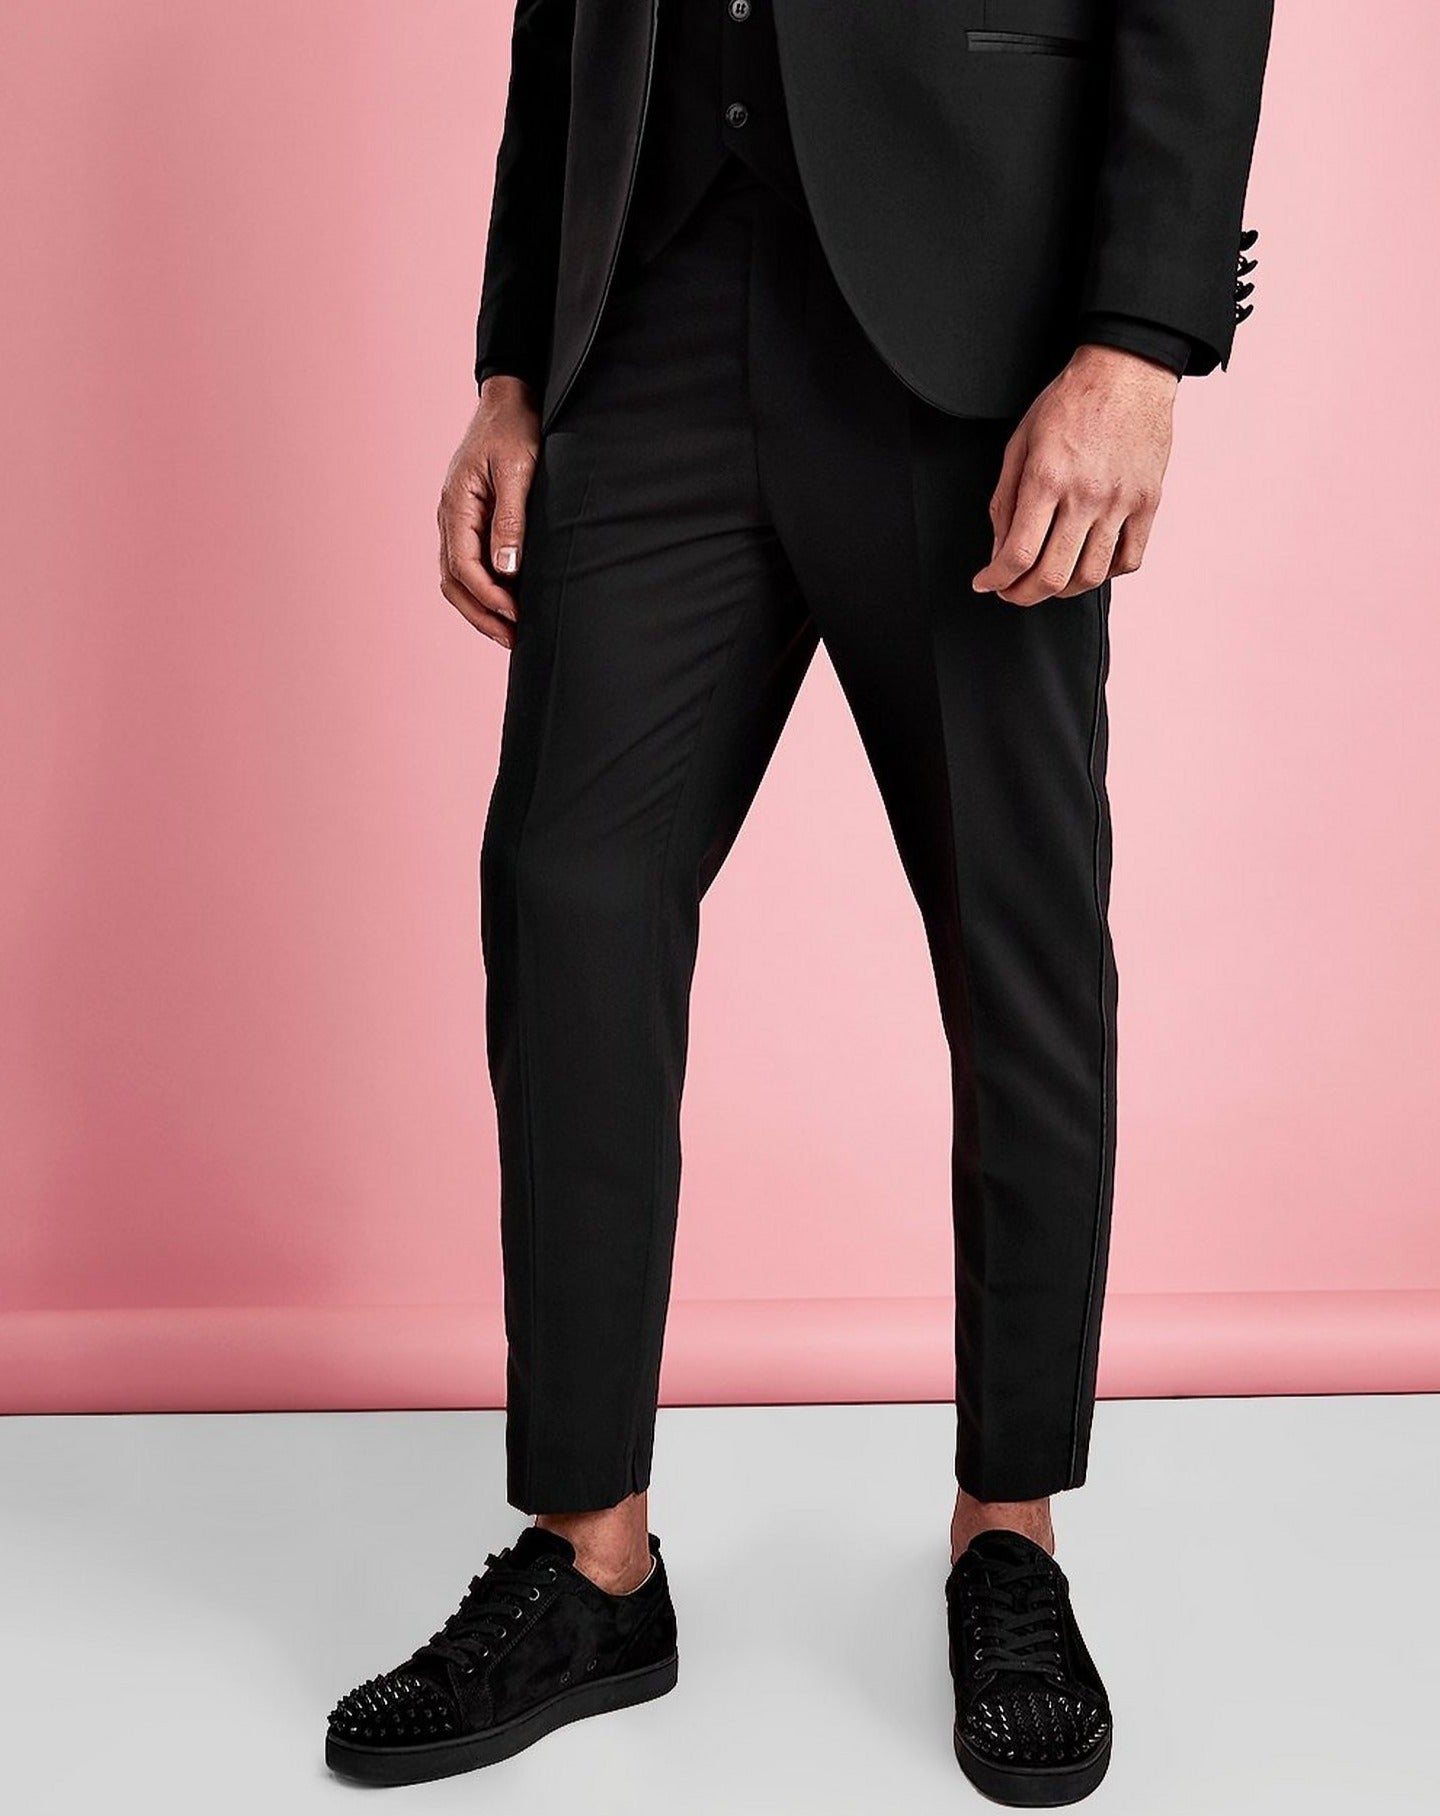 Paul Andrew Ford Black Men's Tux Trousers | Mr. Munro